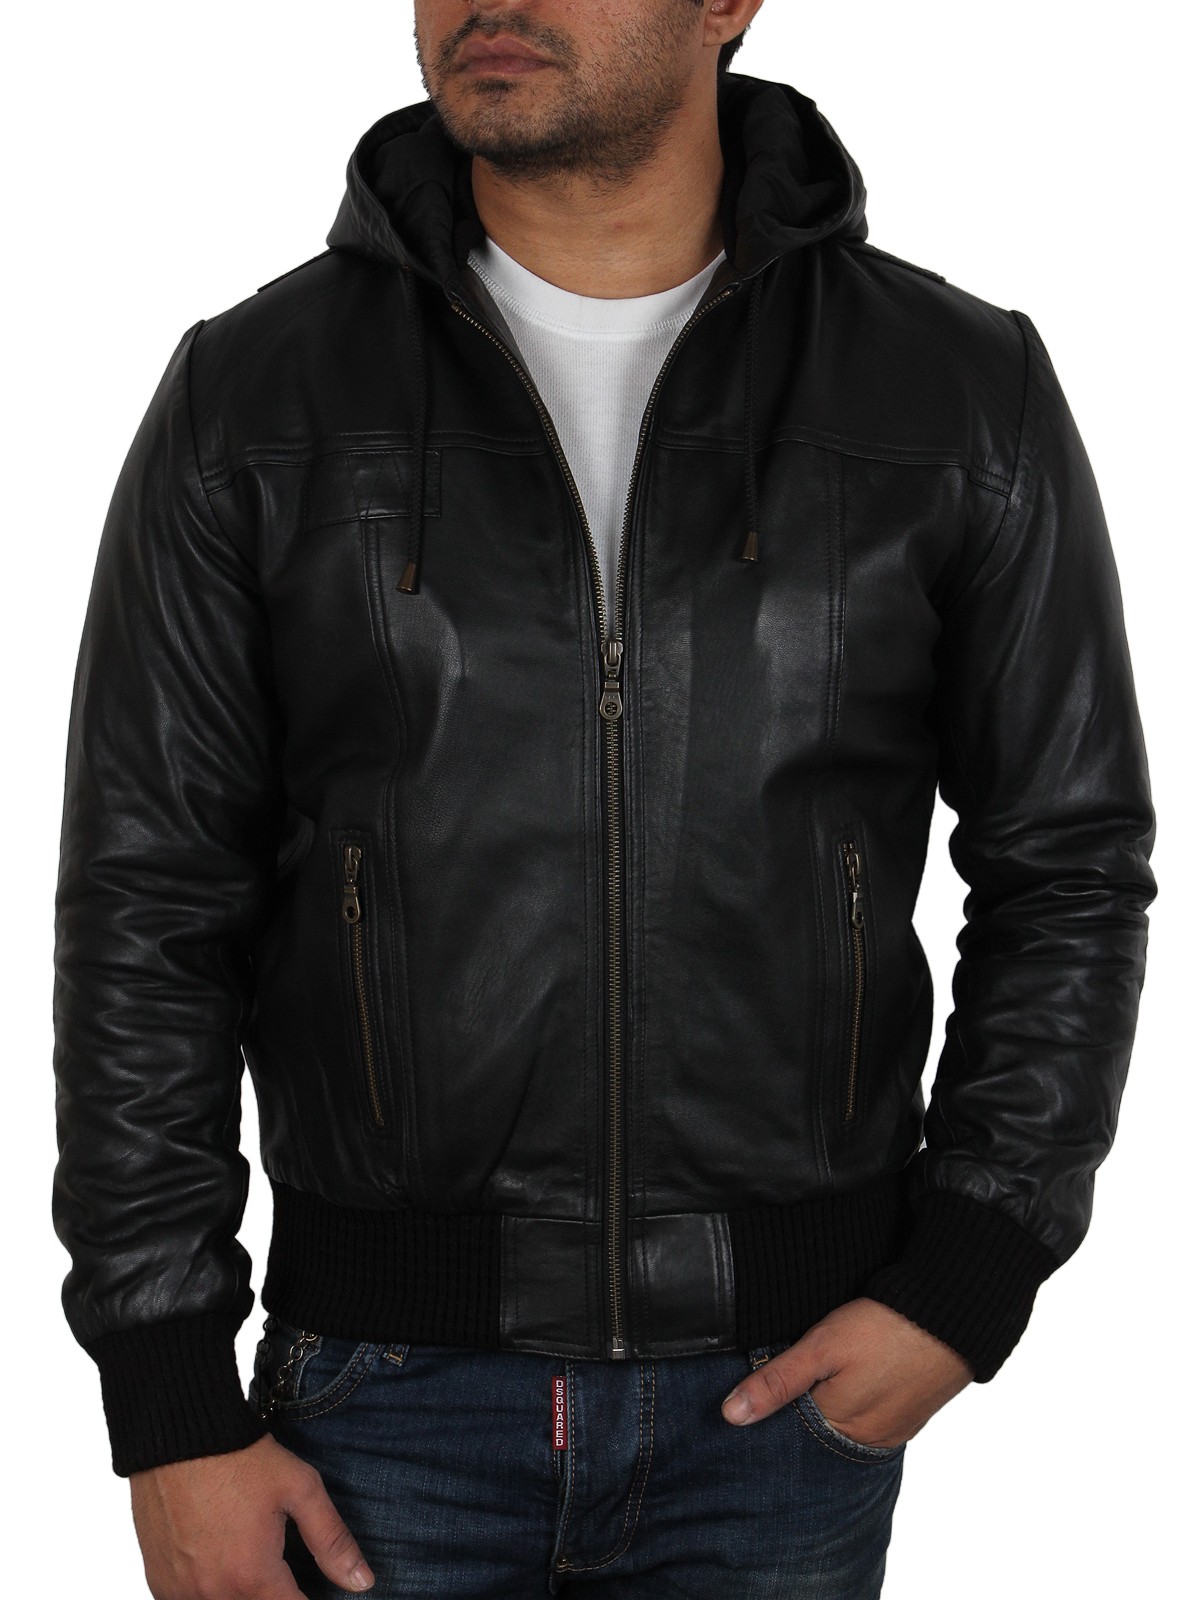 Leather hoodie black pubg фото 56